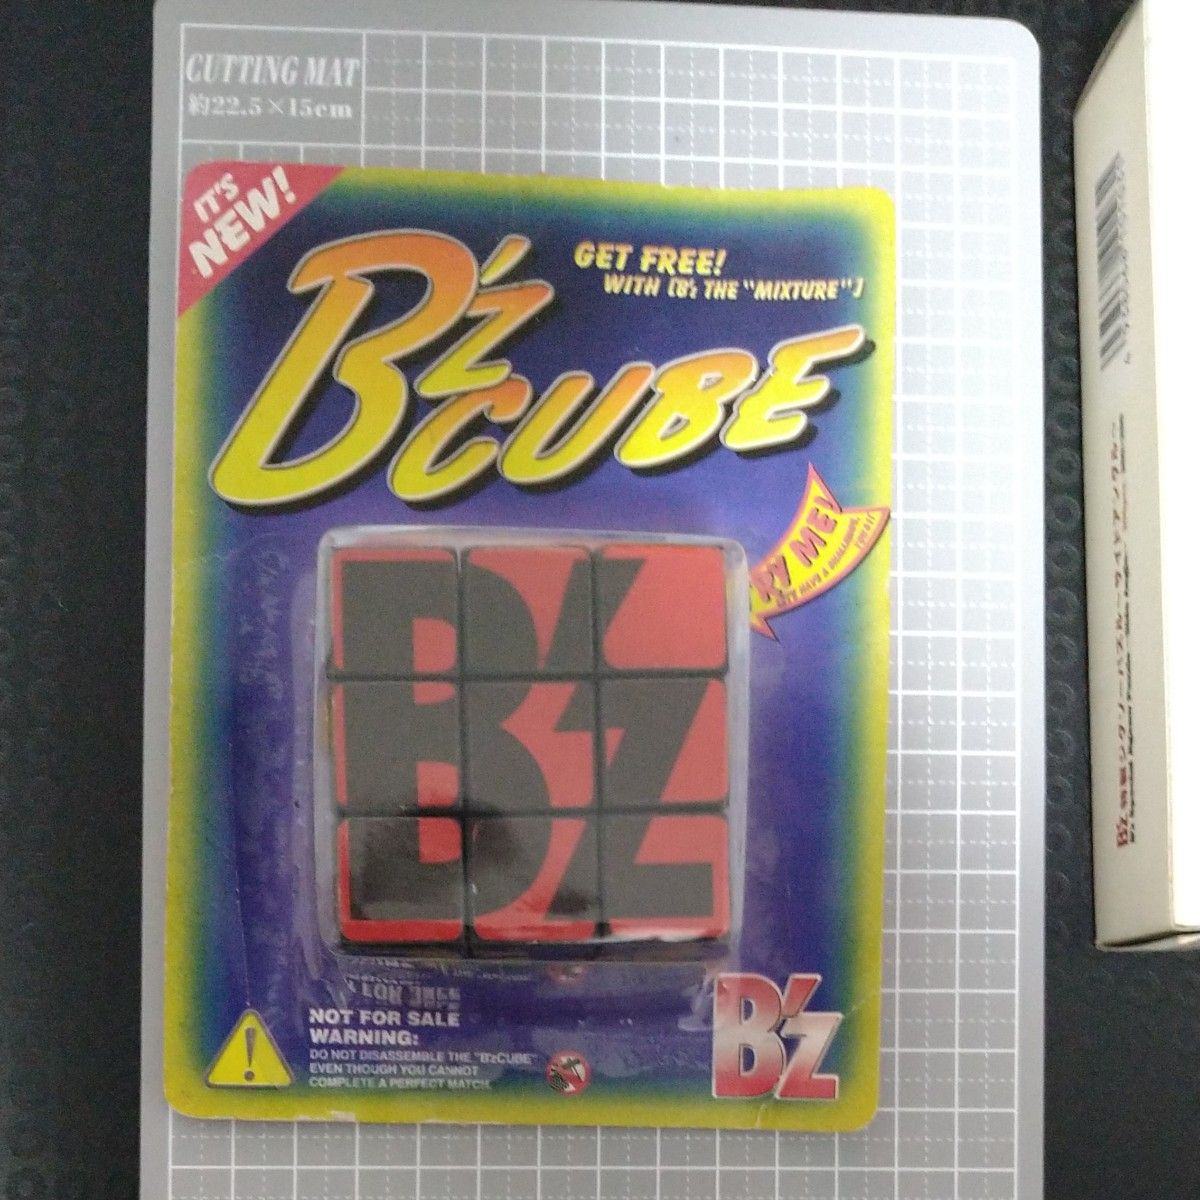 Bz The Mixtureの非売品ルービックキューブとBzTheBsstPleasureの非売品ジグソーパズルのセット販売